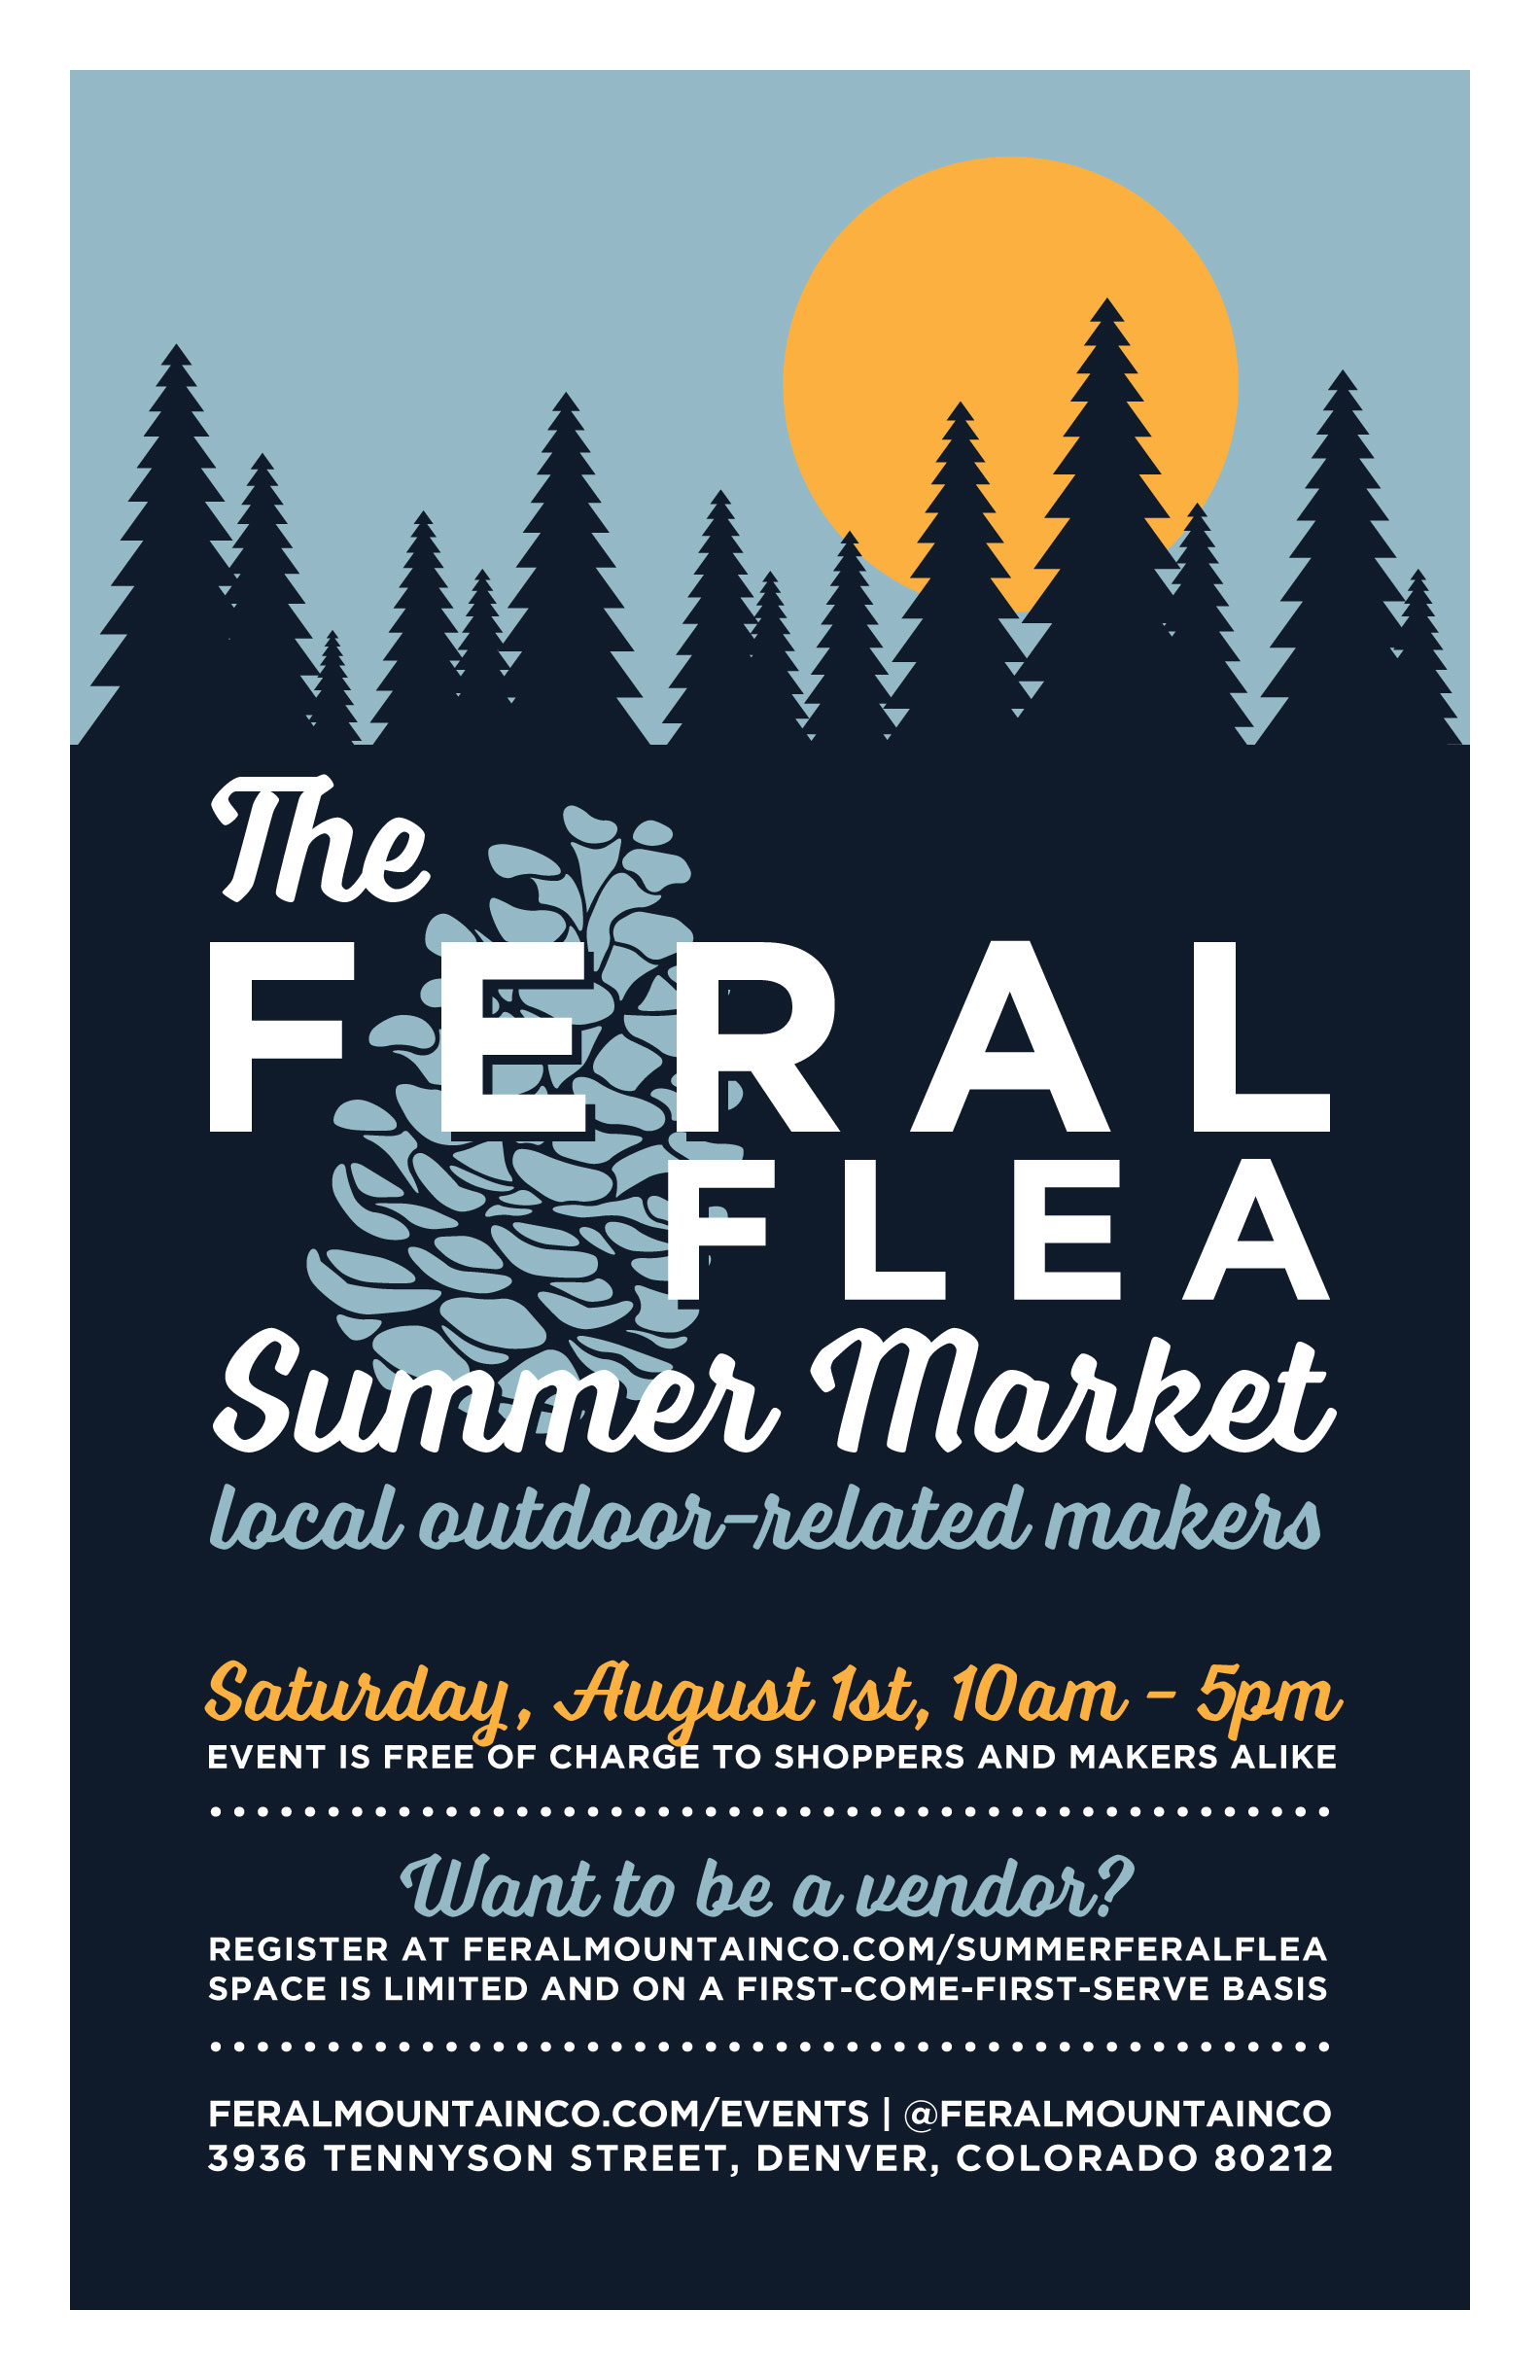 FERAL Flea Holiday Market